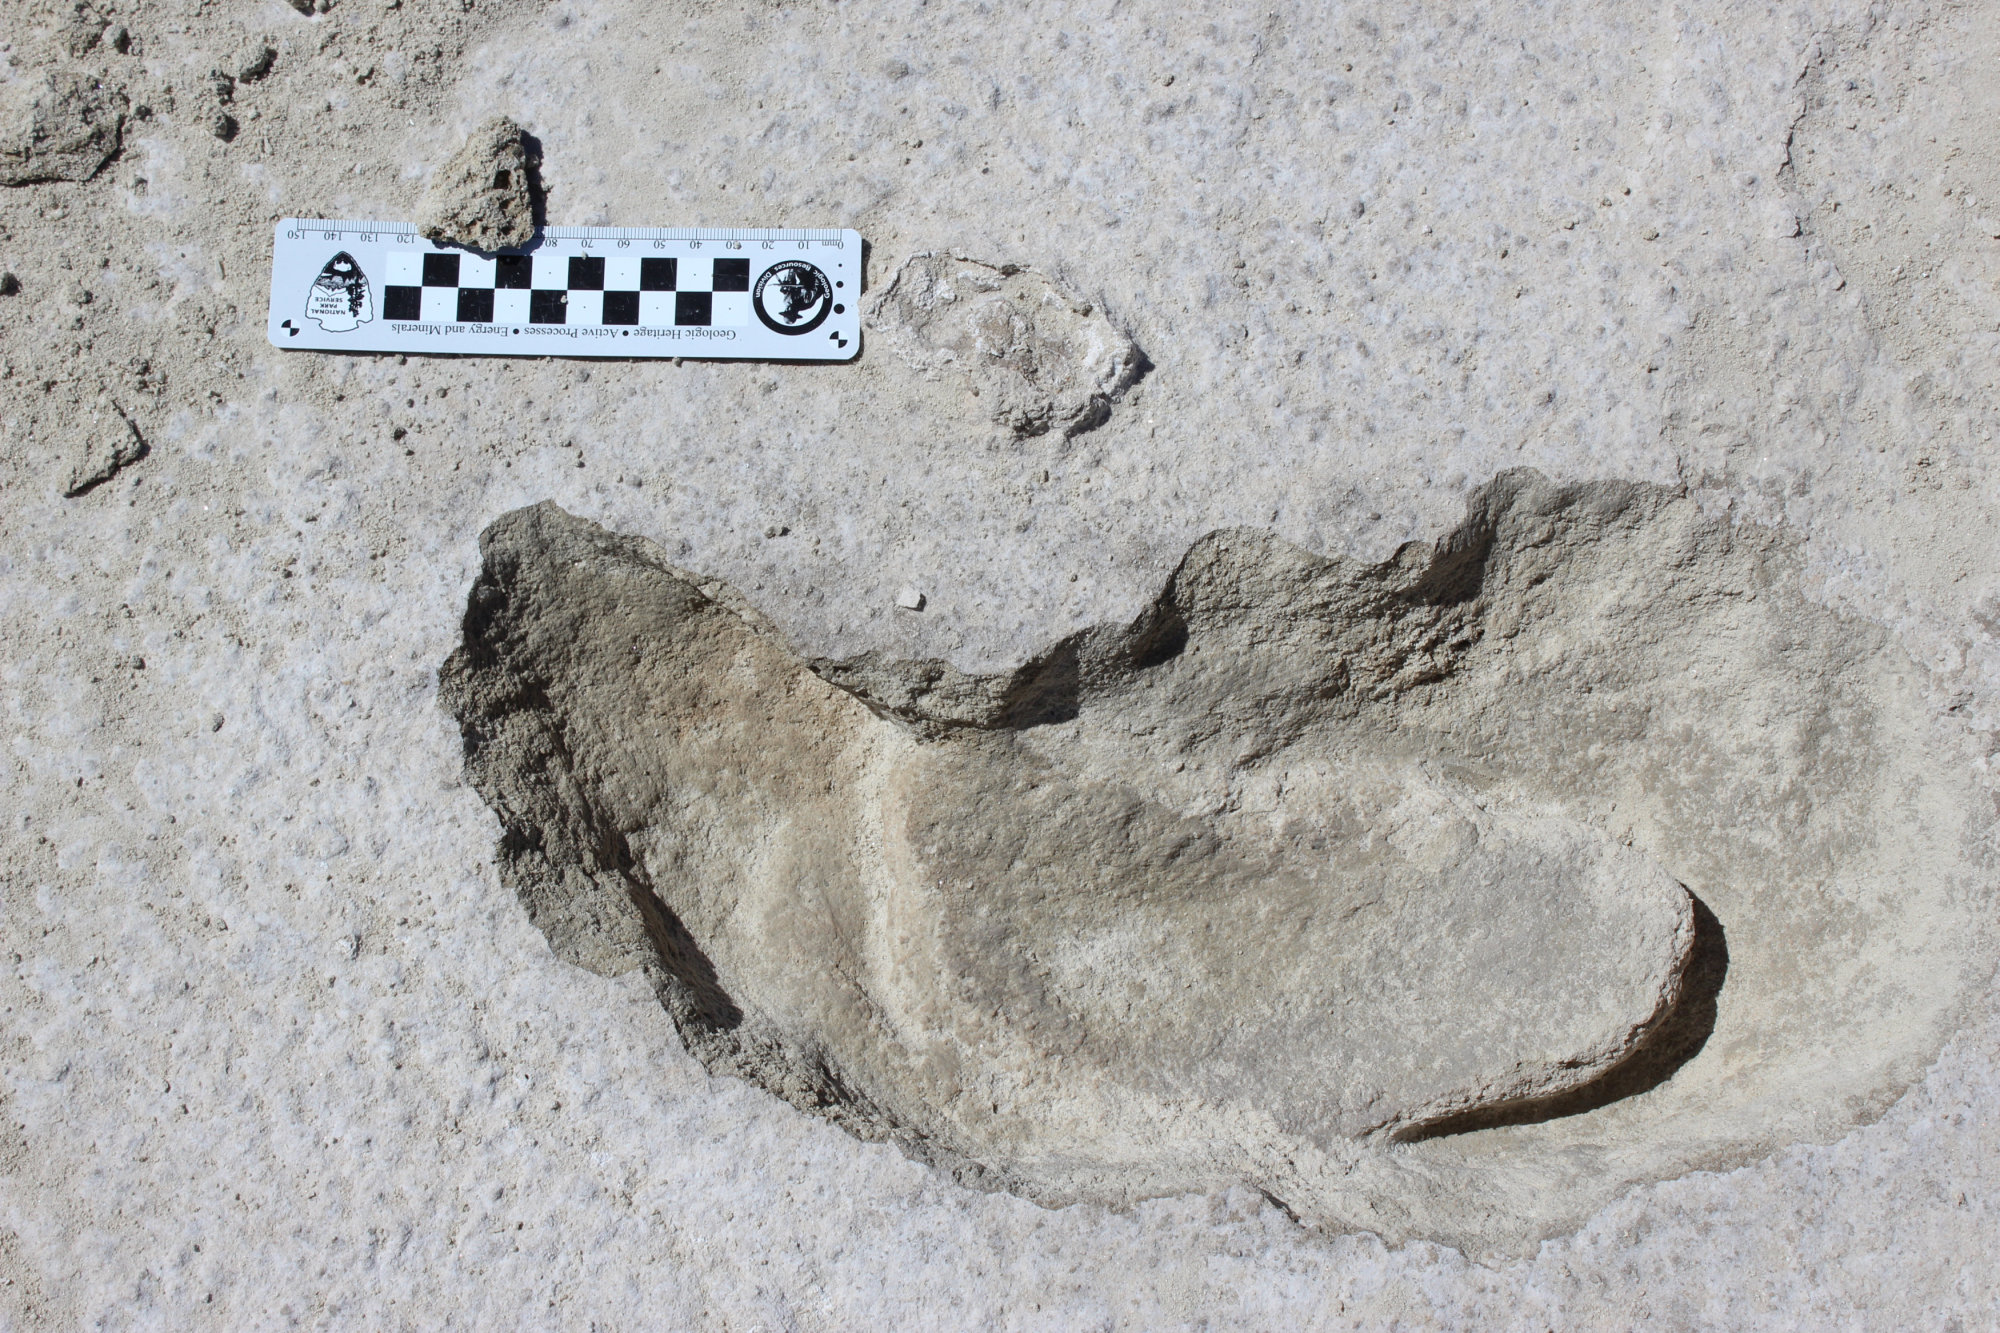 Fossilized Footprints - White Sands National Park (U.S. National